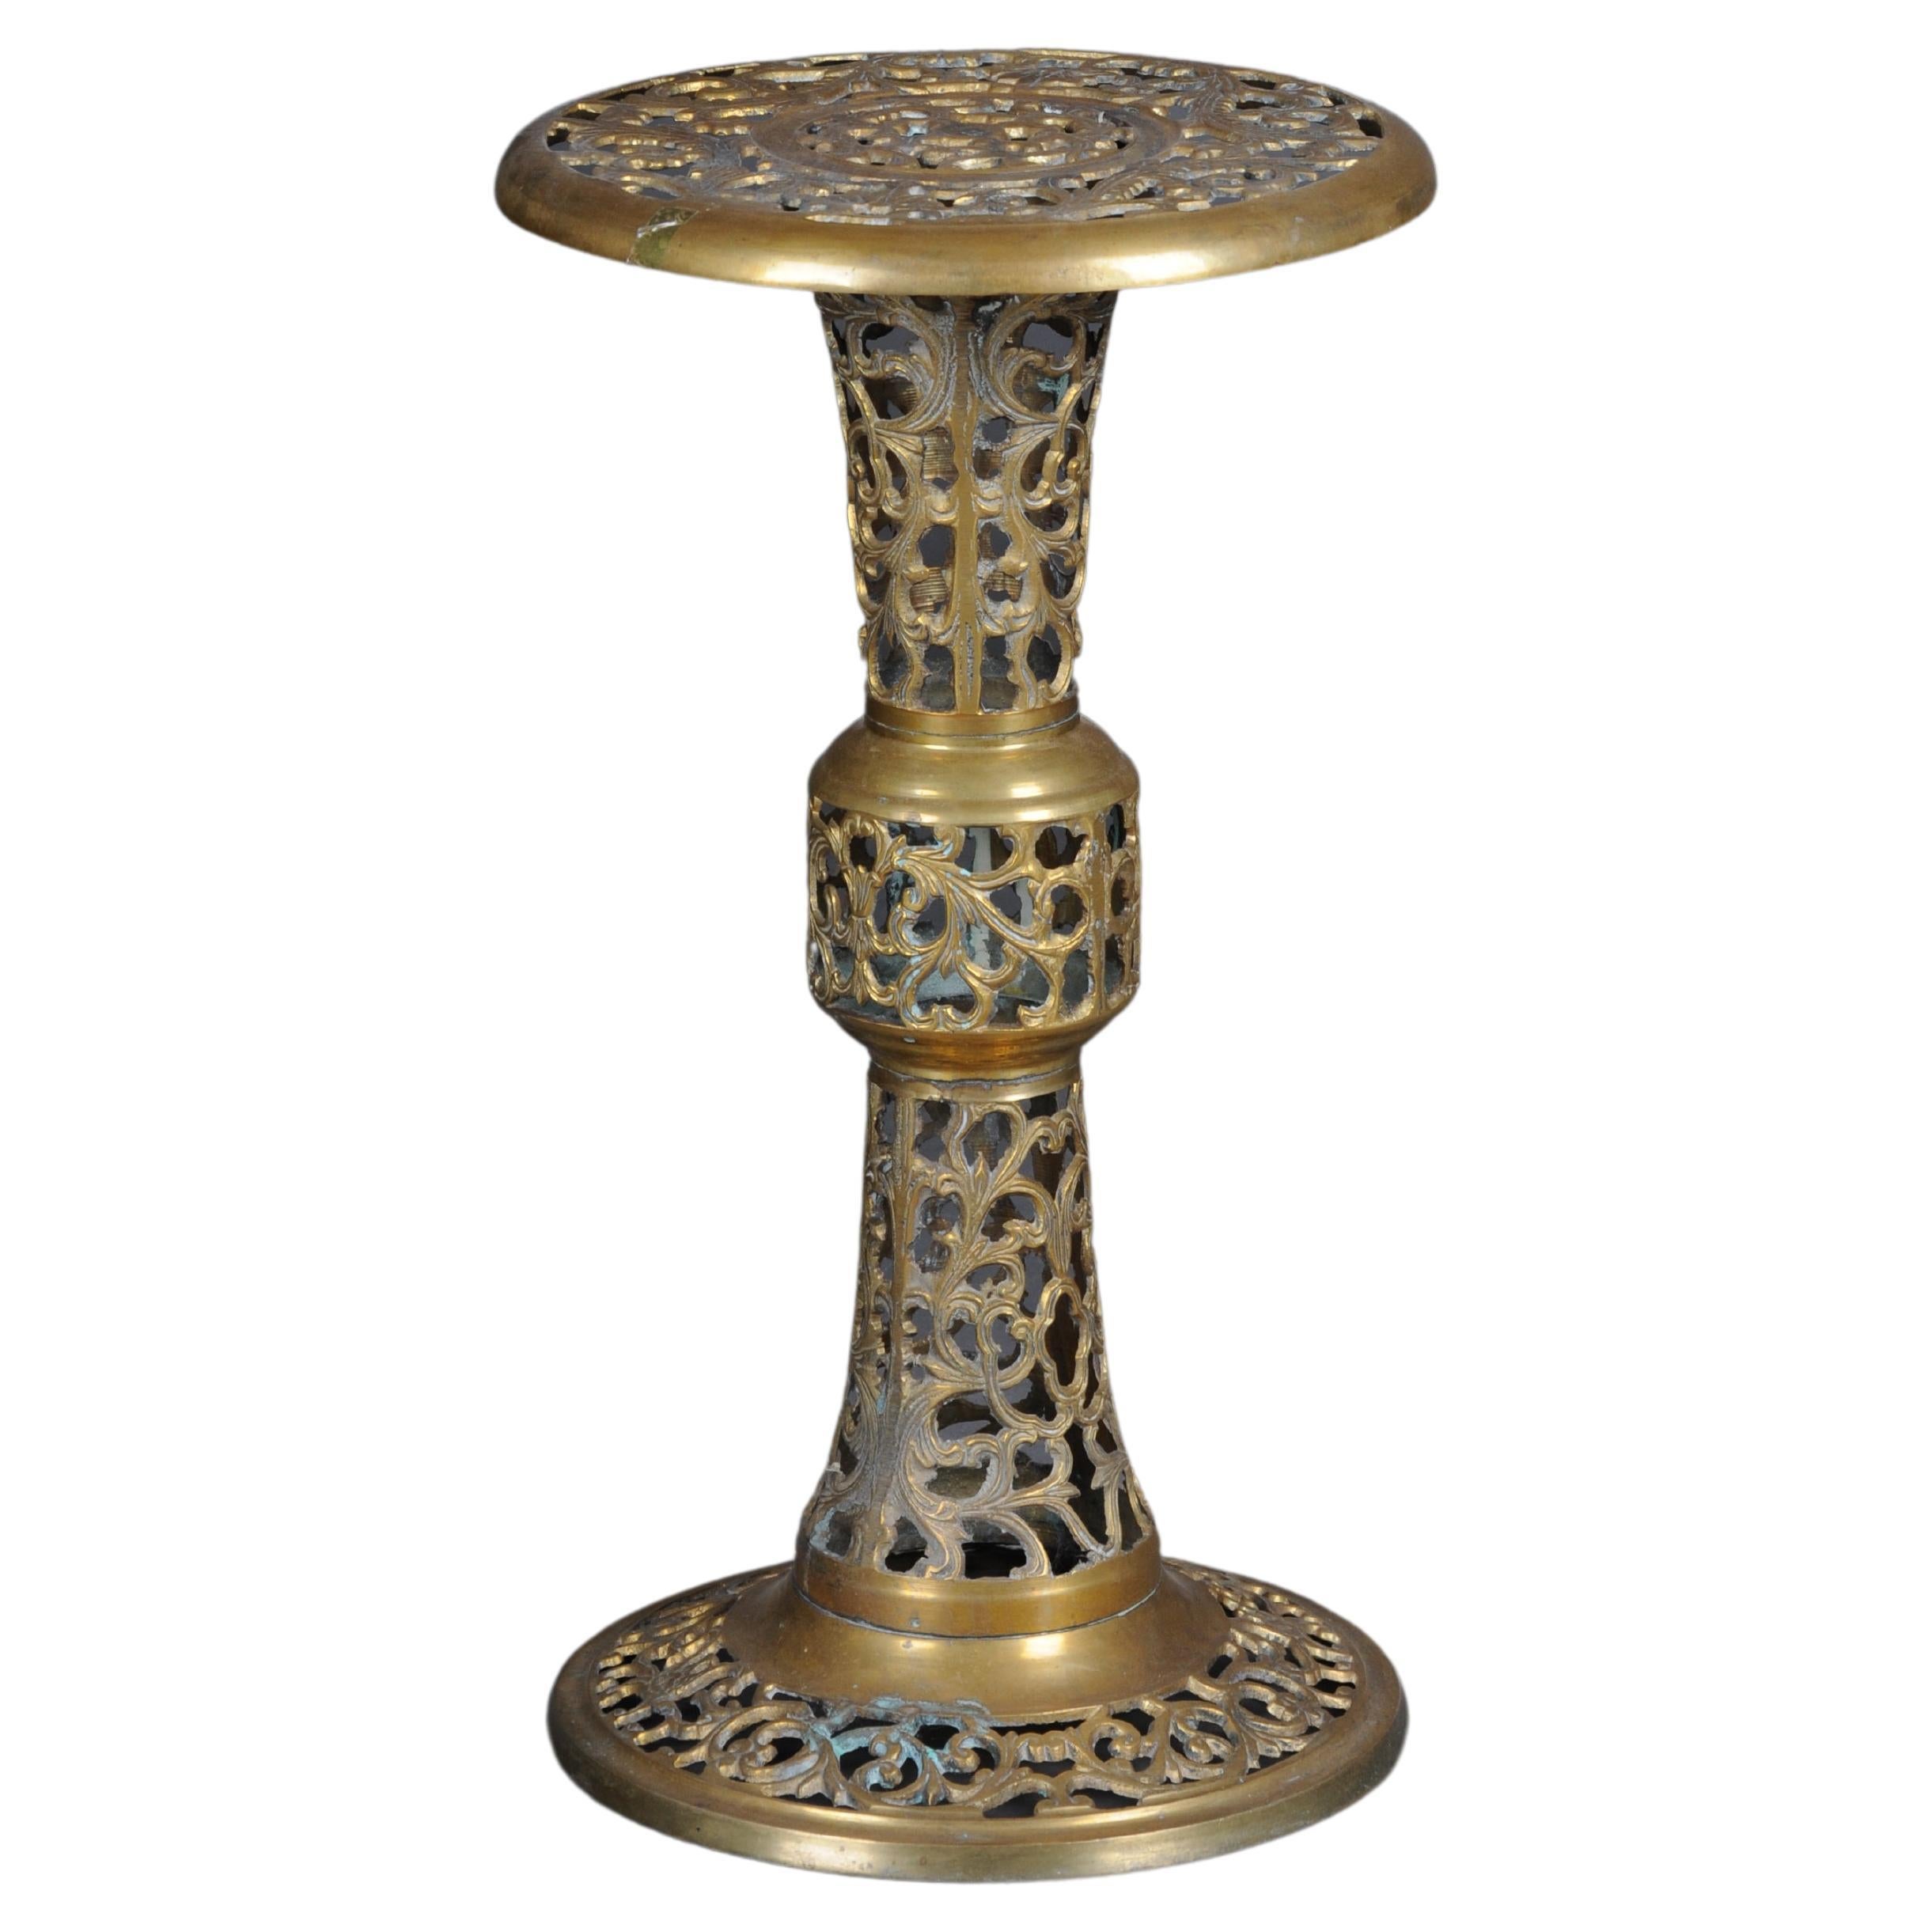 Very Interesting Ornate Moorish Brass Side Table